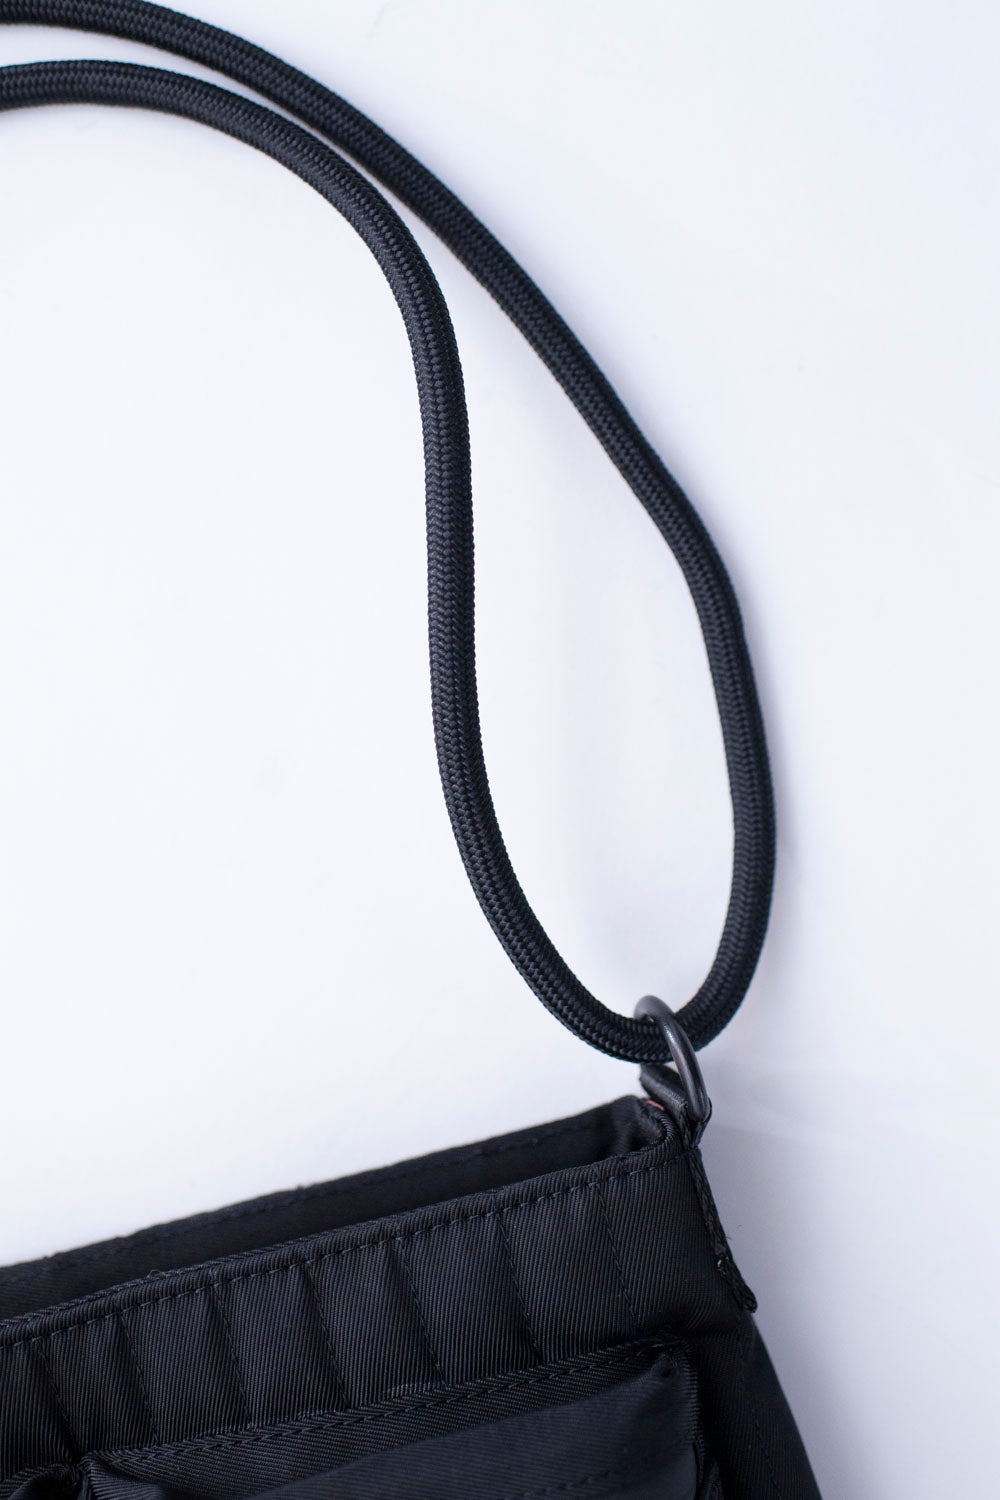 OGL-ORI-MILLIE-BLK - Originale Tech Material Millie Bag - Black